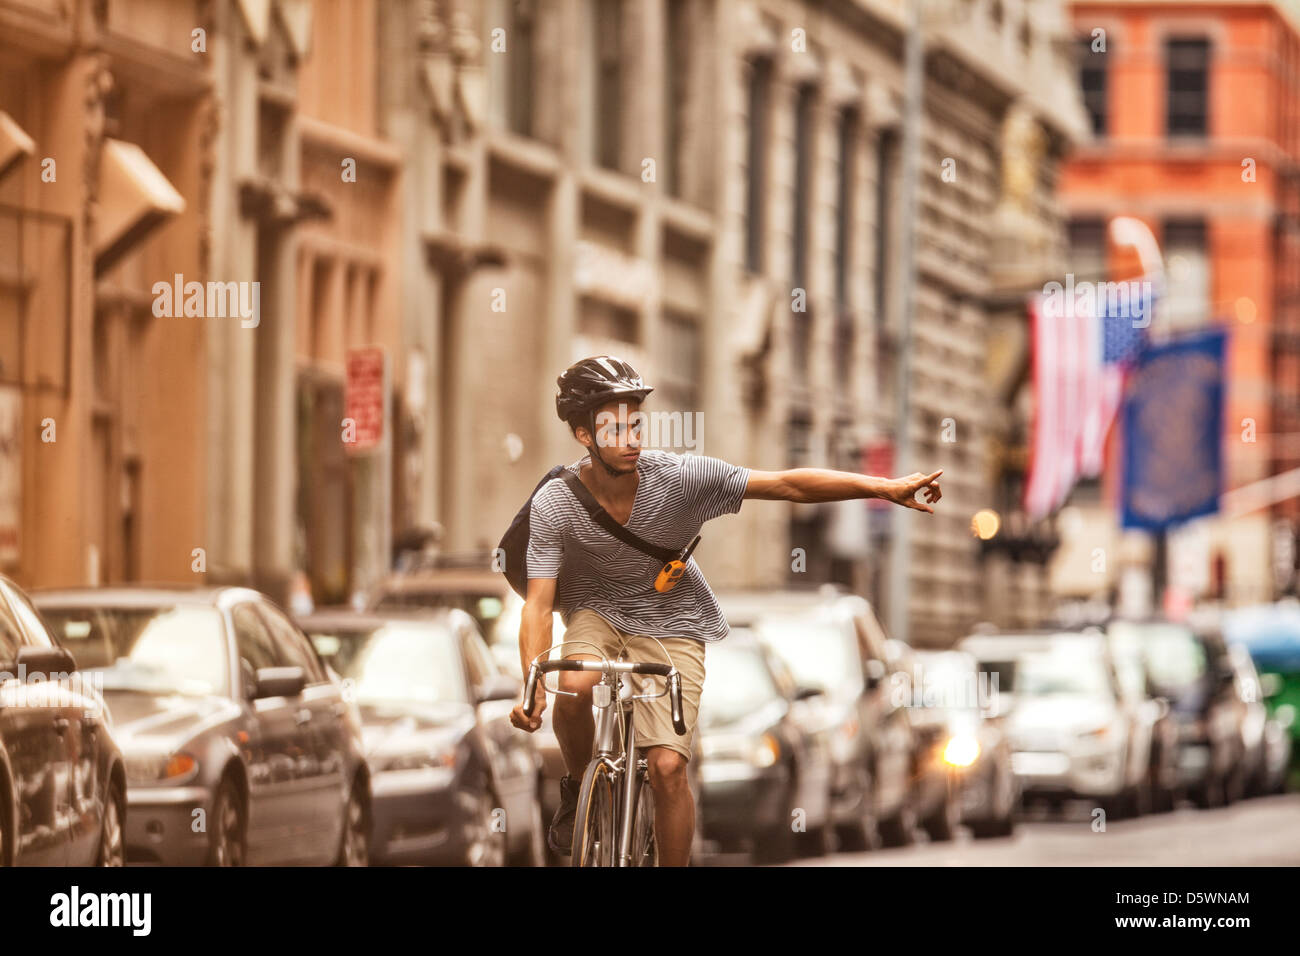 Man riding bicycle on city street Stock Photo